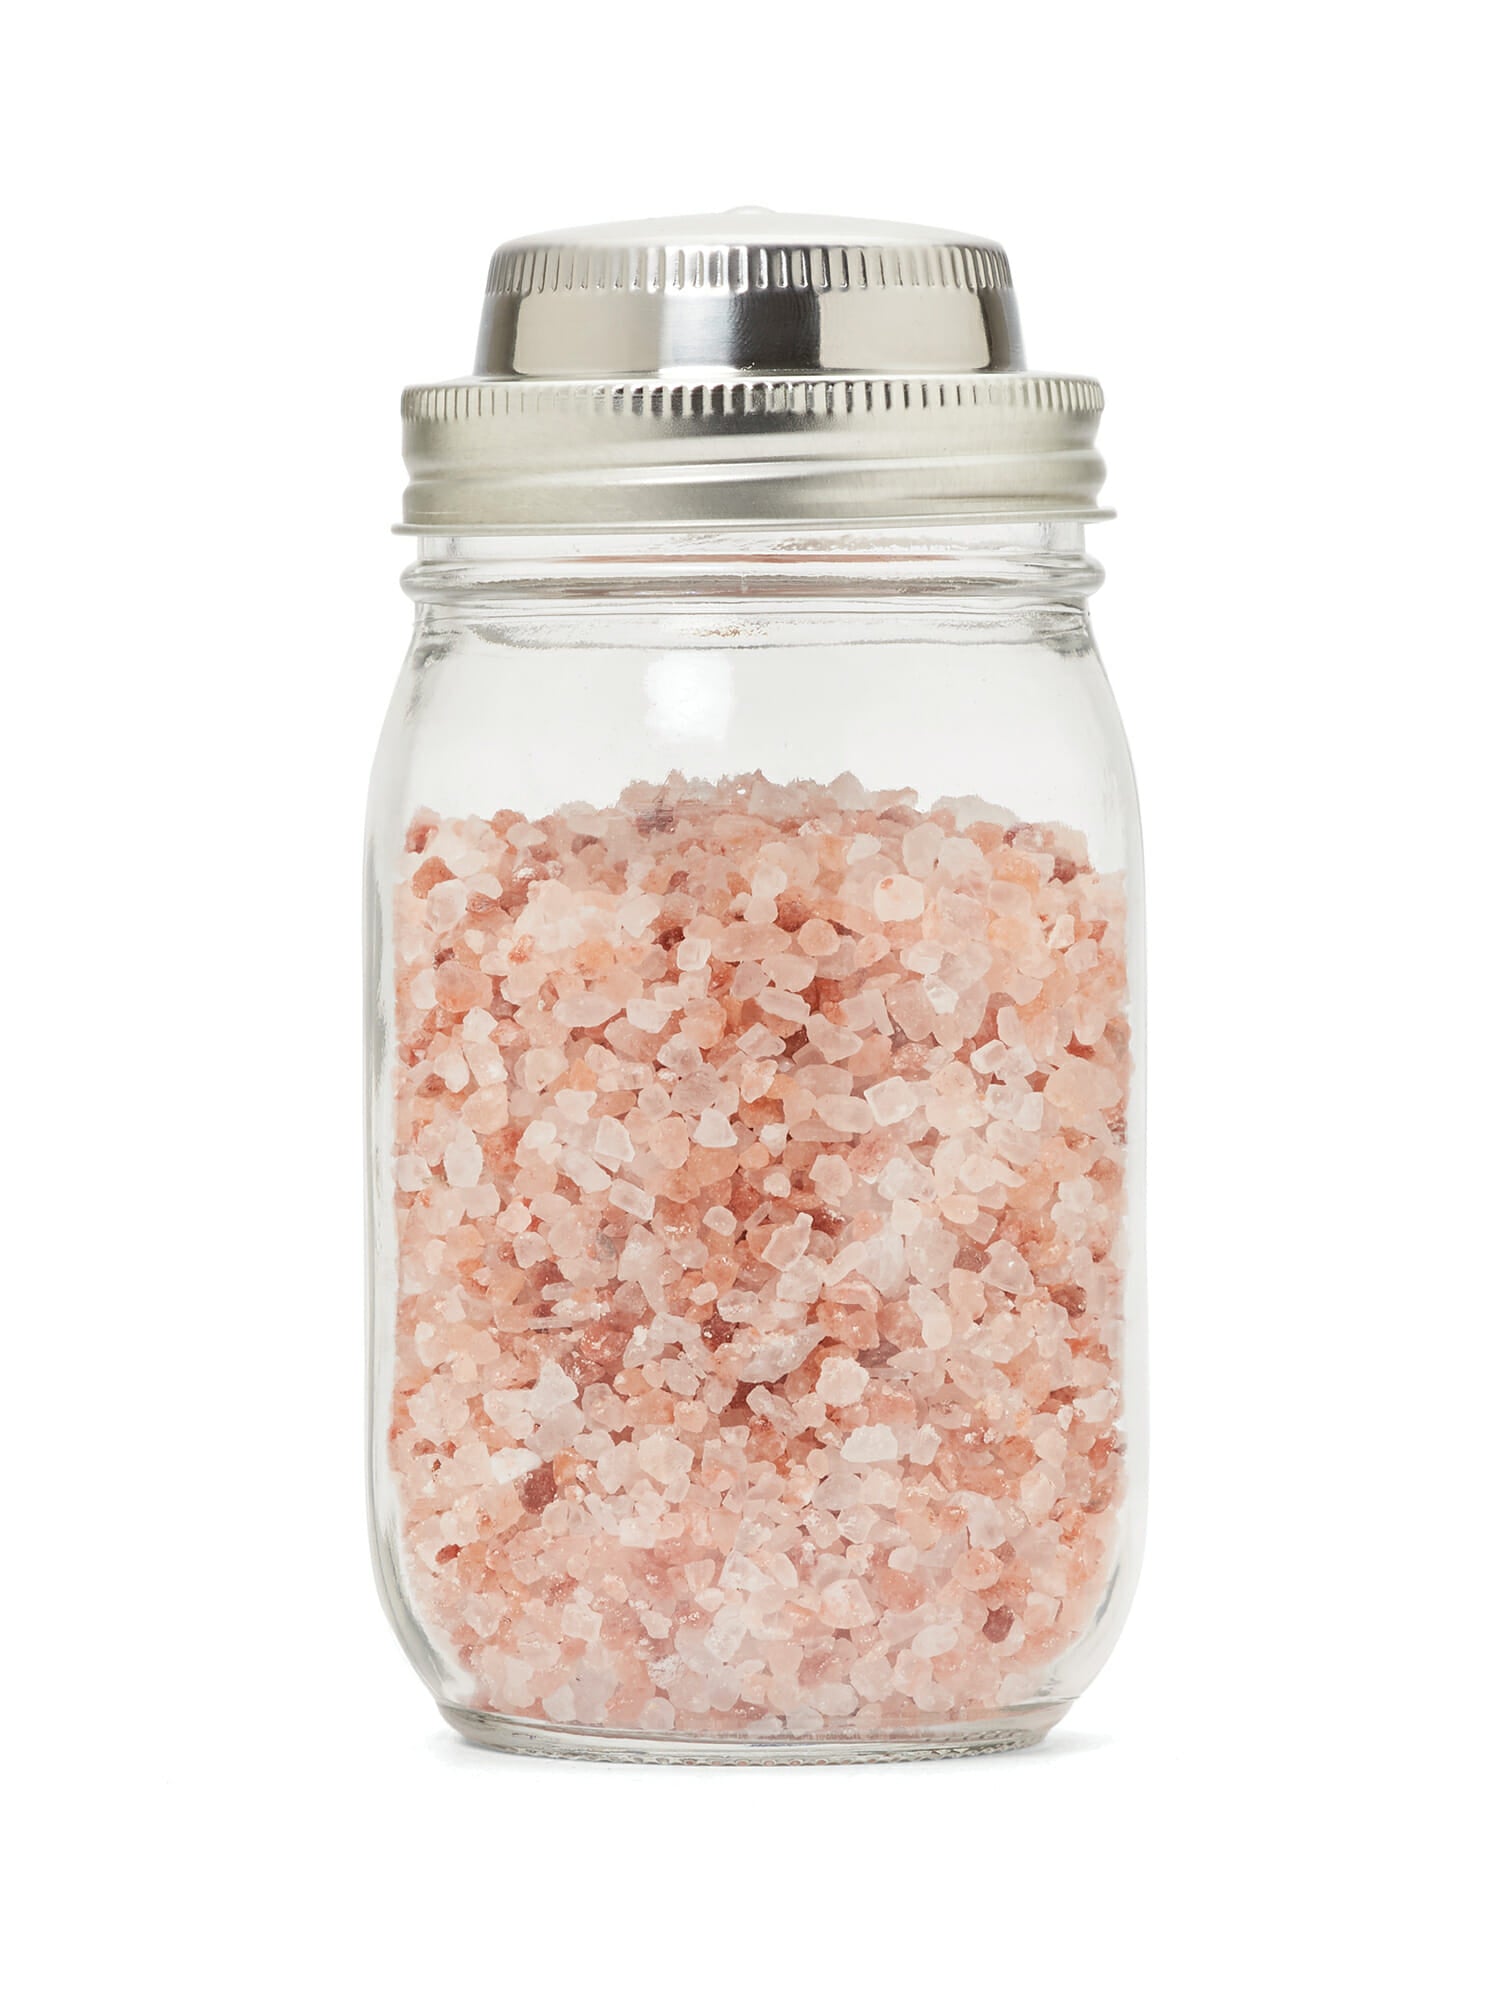 Jarware stainless steel spice shaker lid on pint Mason jar with pink Himalayan salt